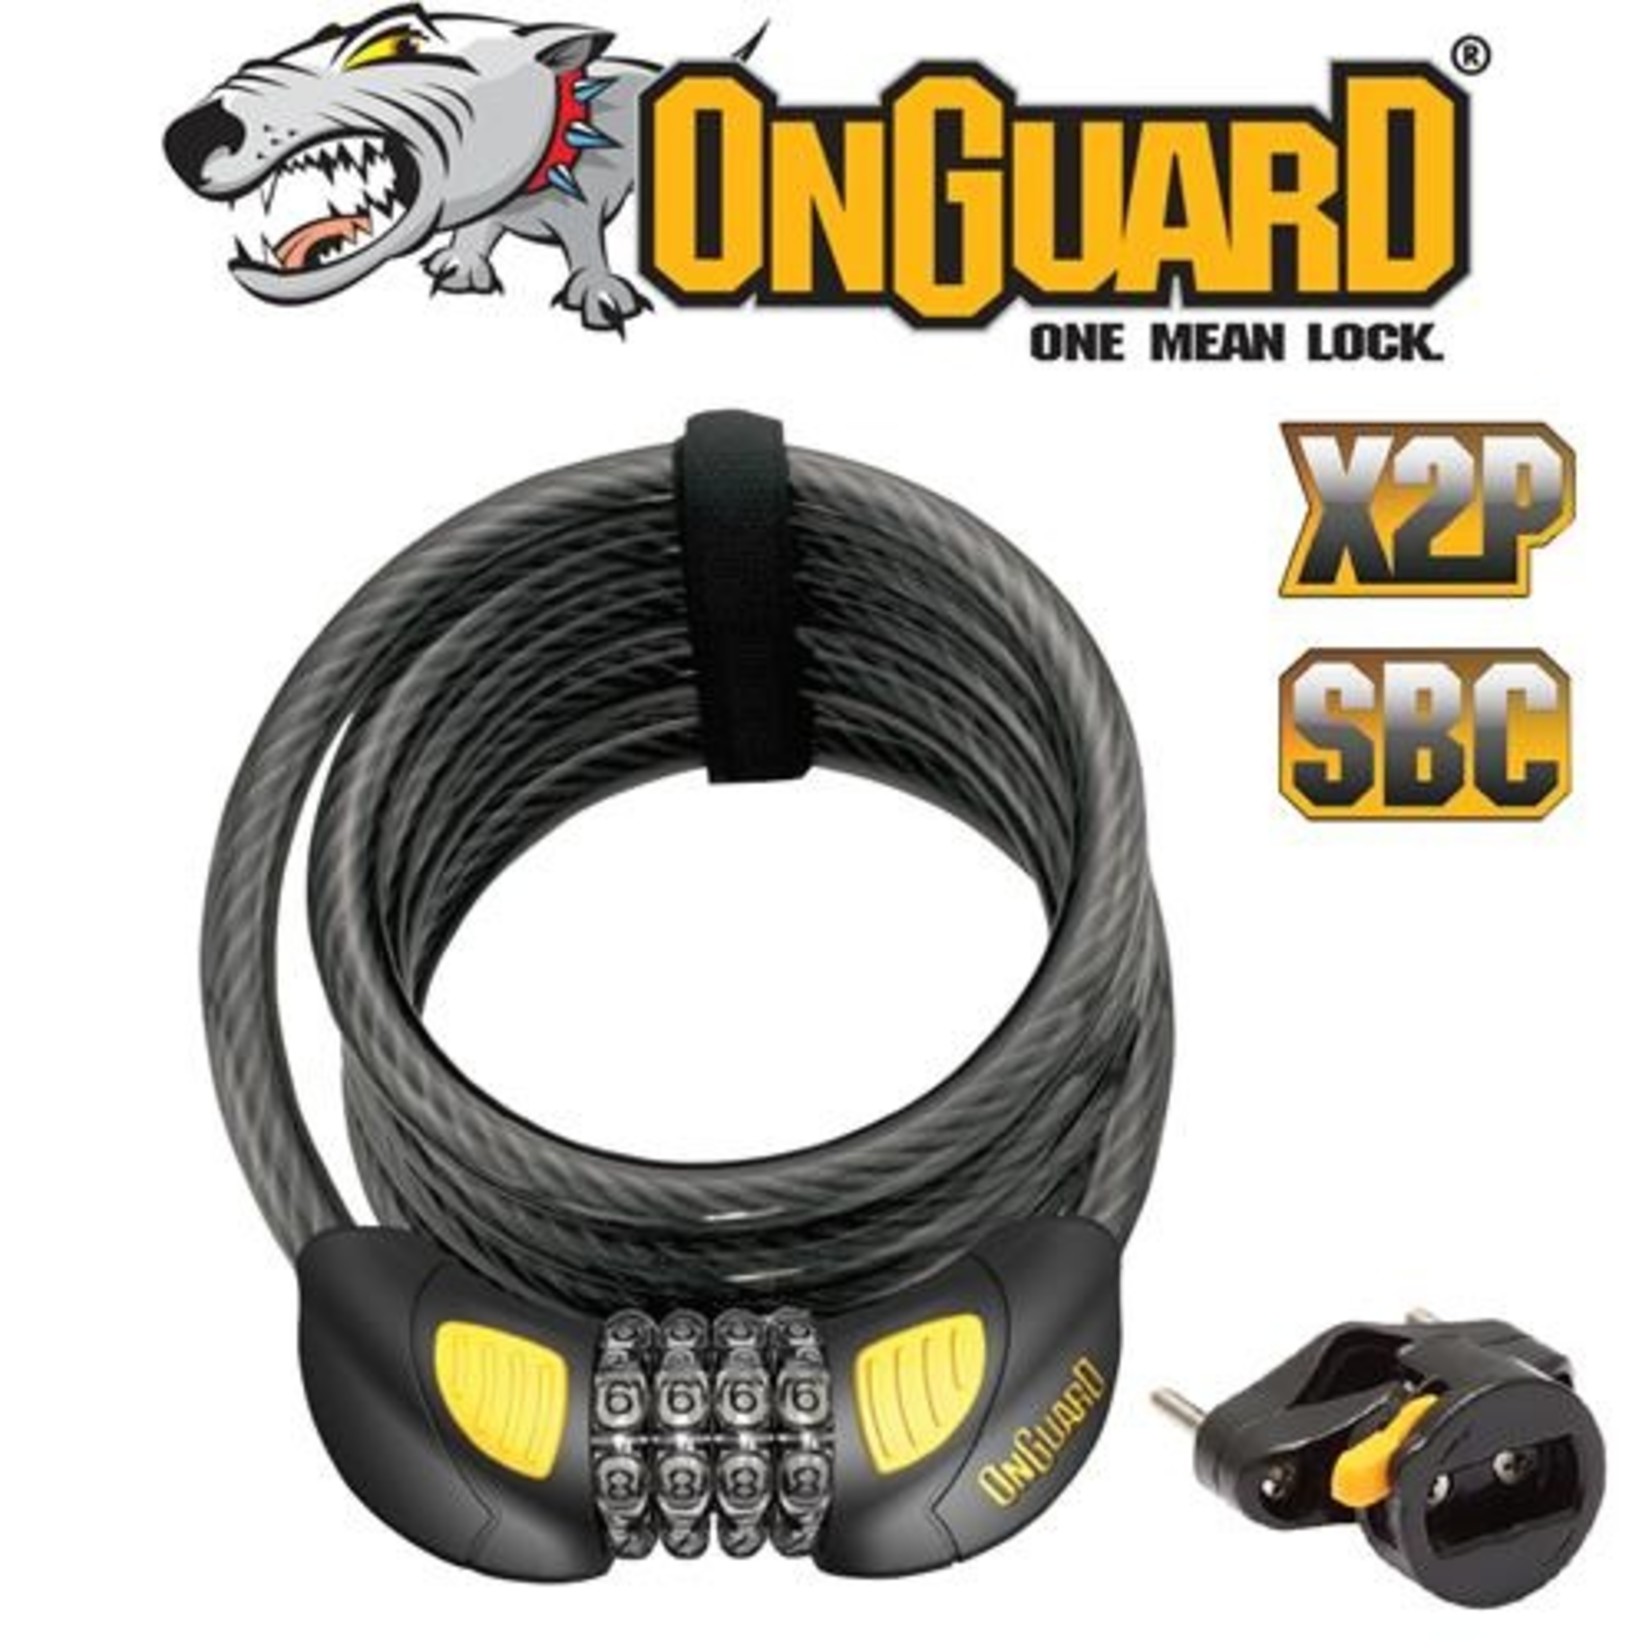 Onguard Onguard Bike Lock - Doberman Series - GLO Coiled Cable Combo Lock - 185cm x 12mm